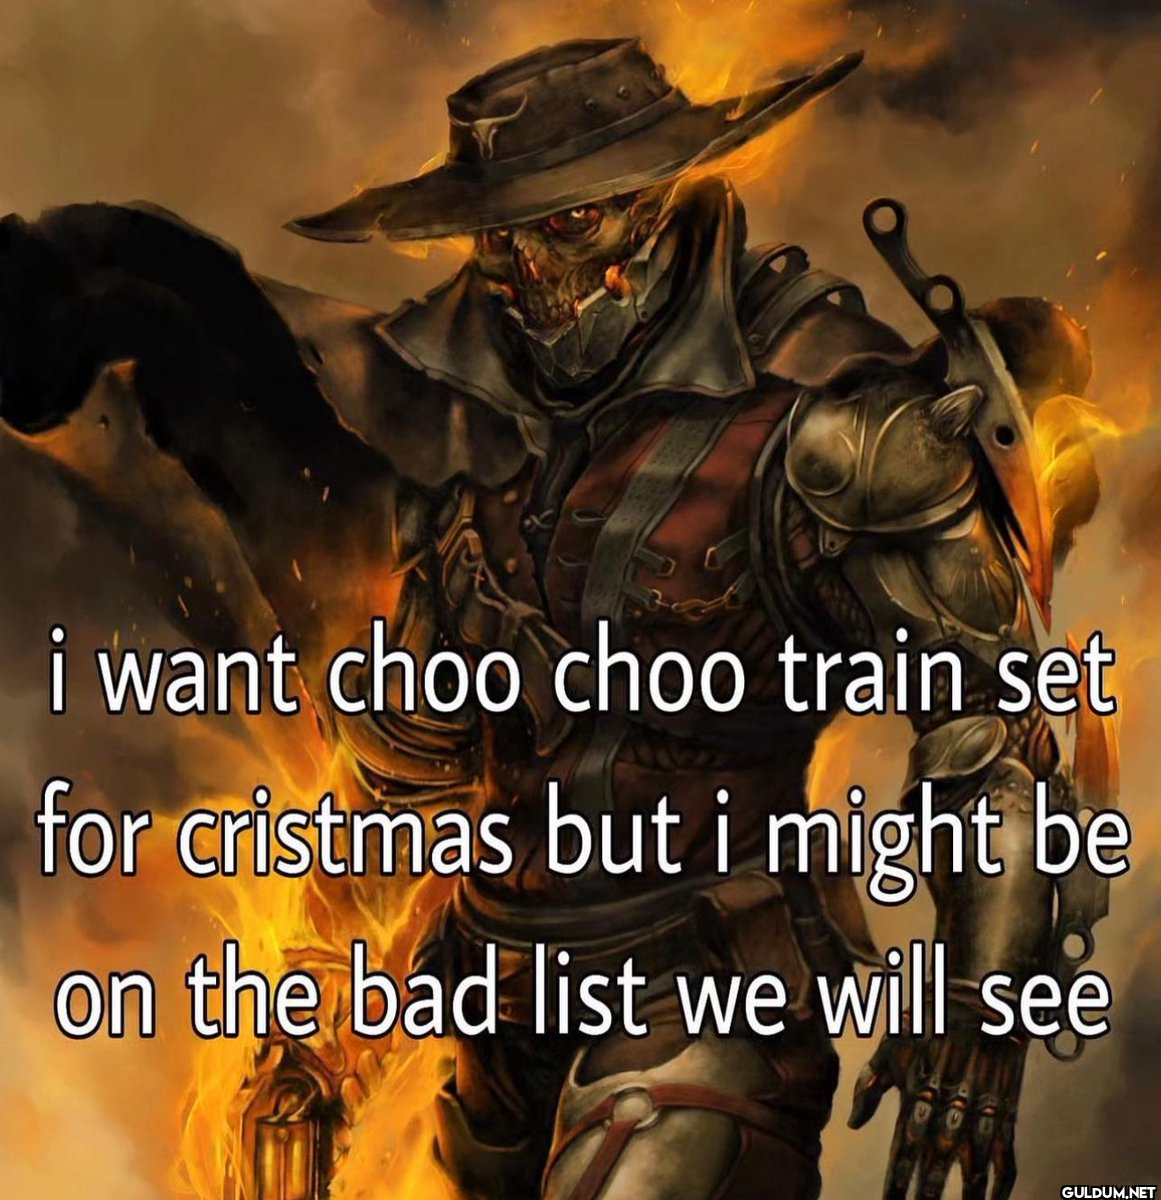 i want choo choo train set...